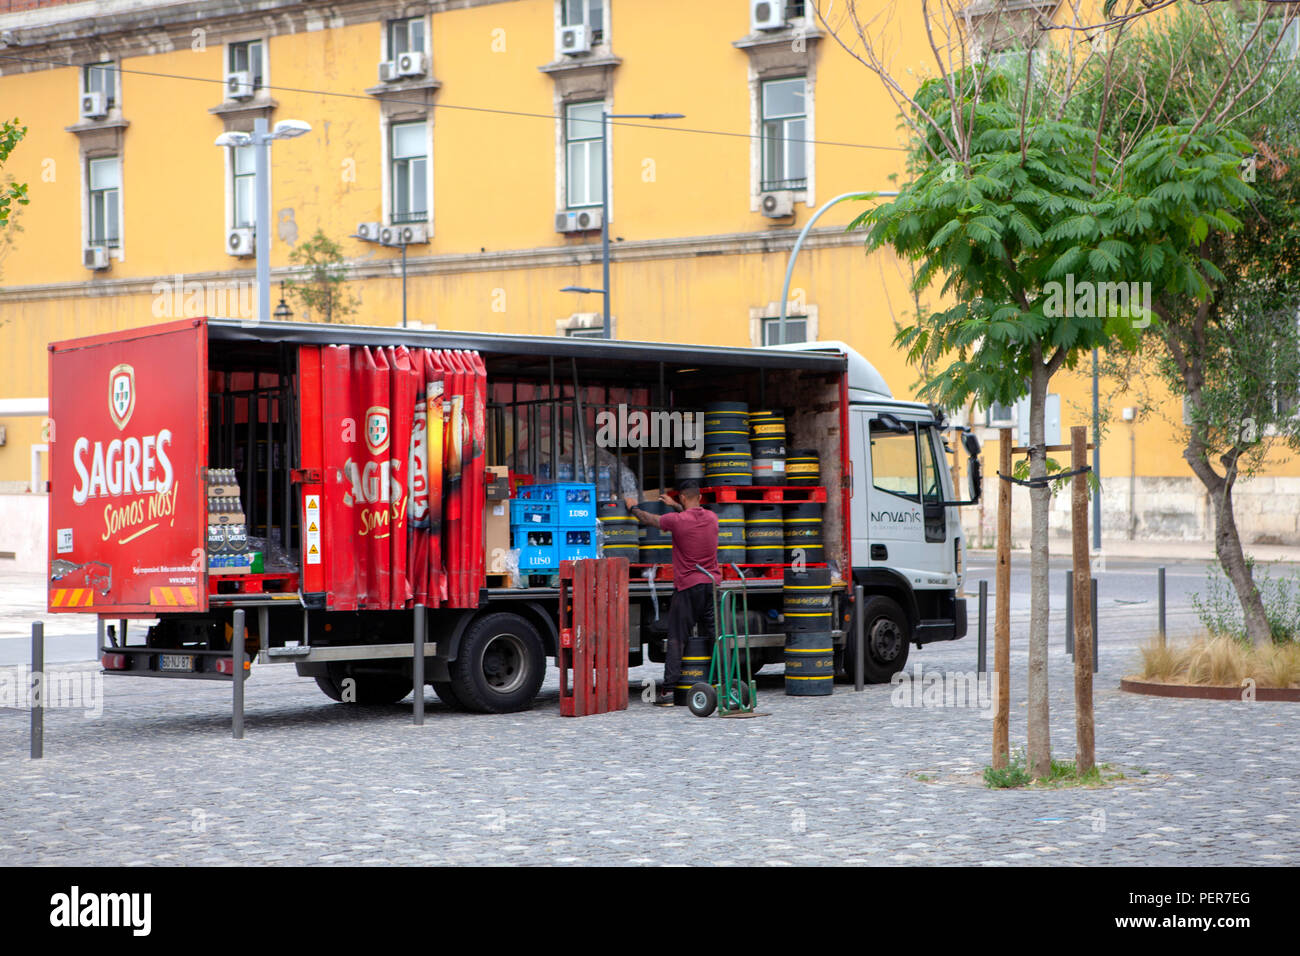 Sagres Bier Lkw in Lissabon Portugal Stockfoto